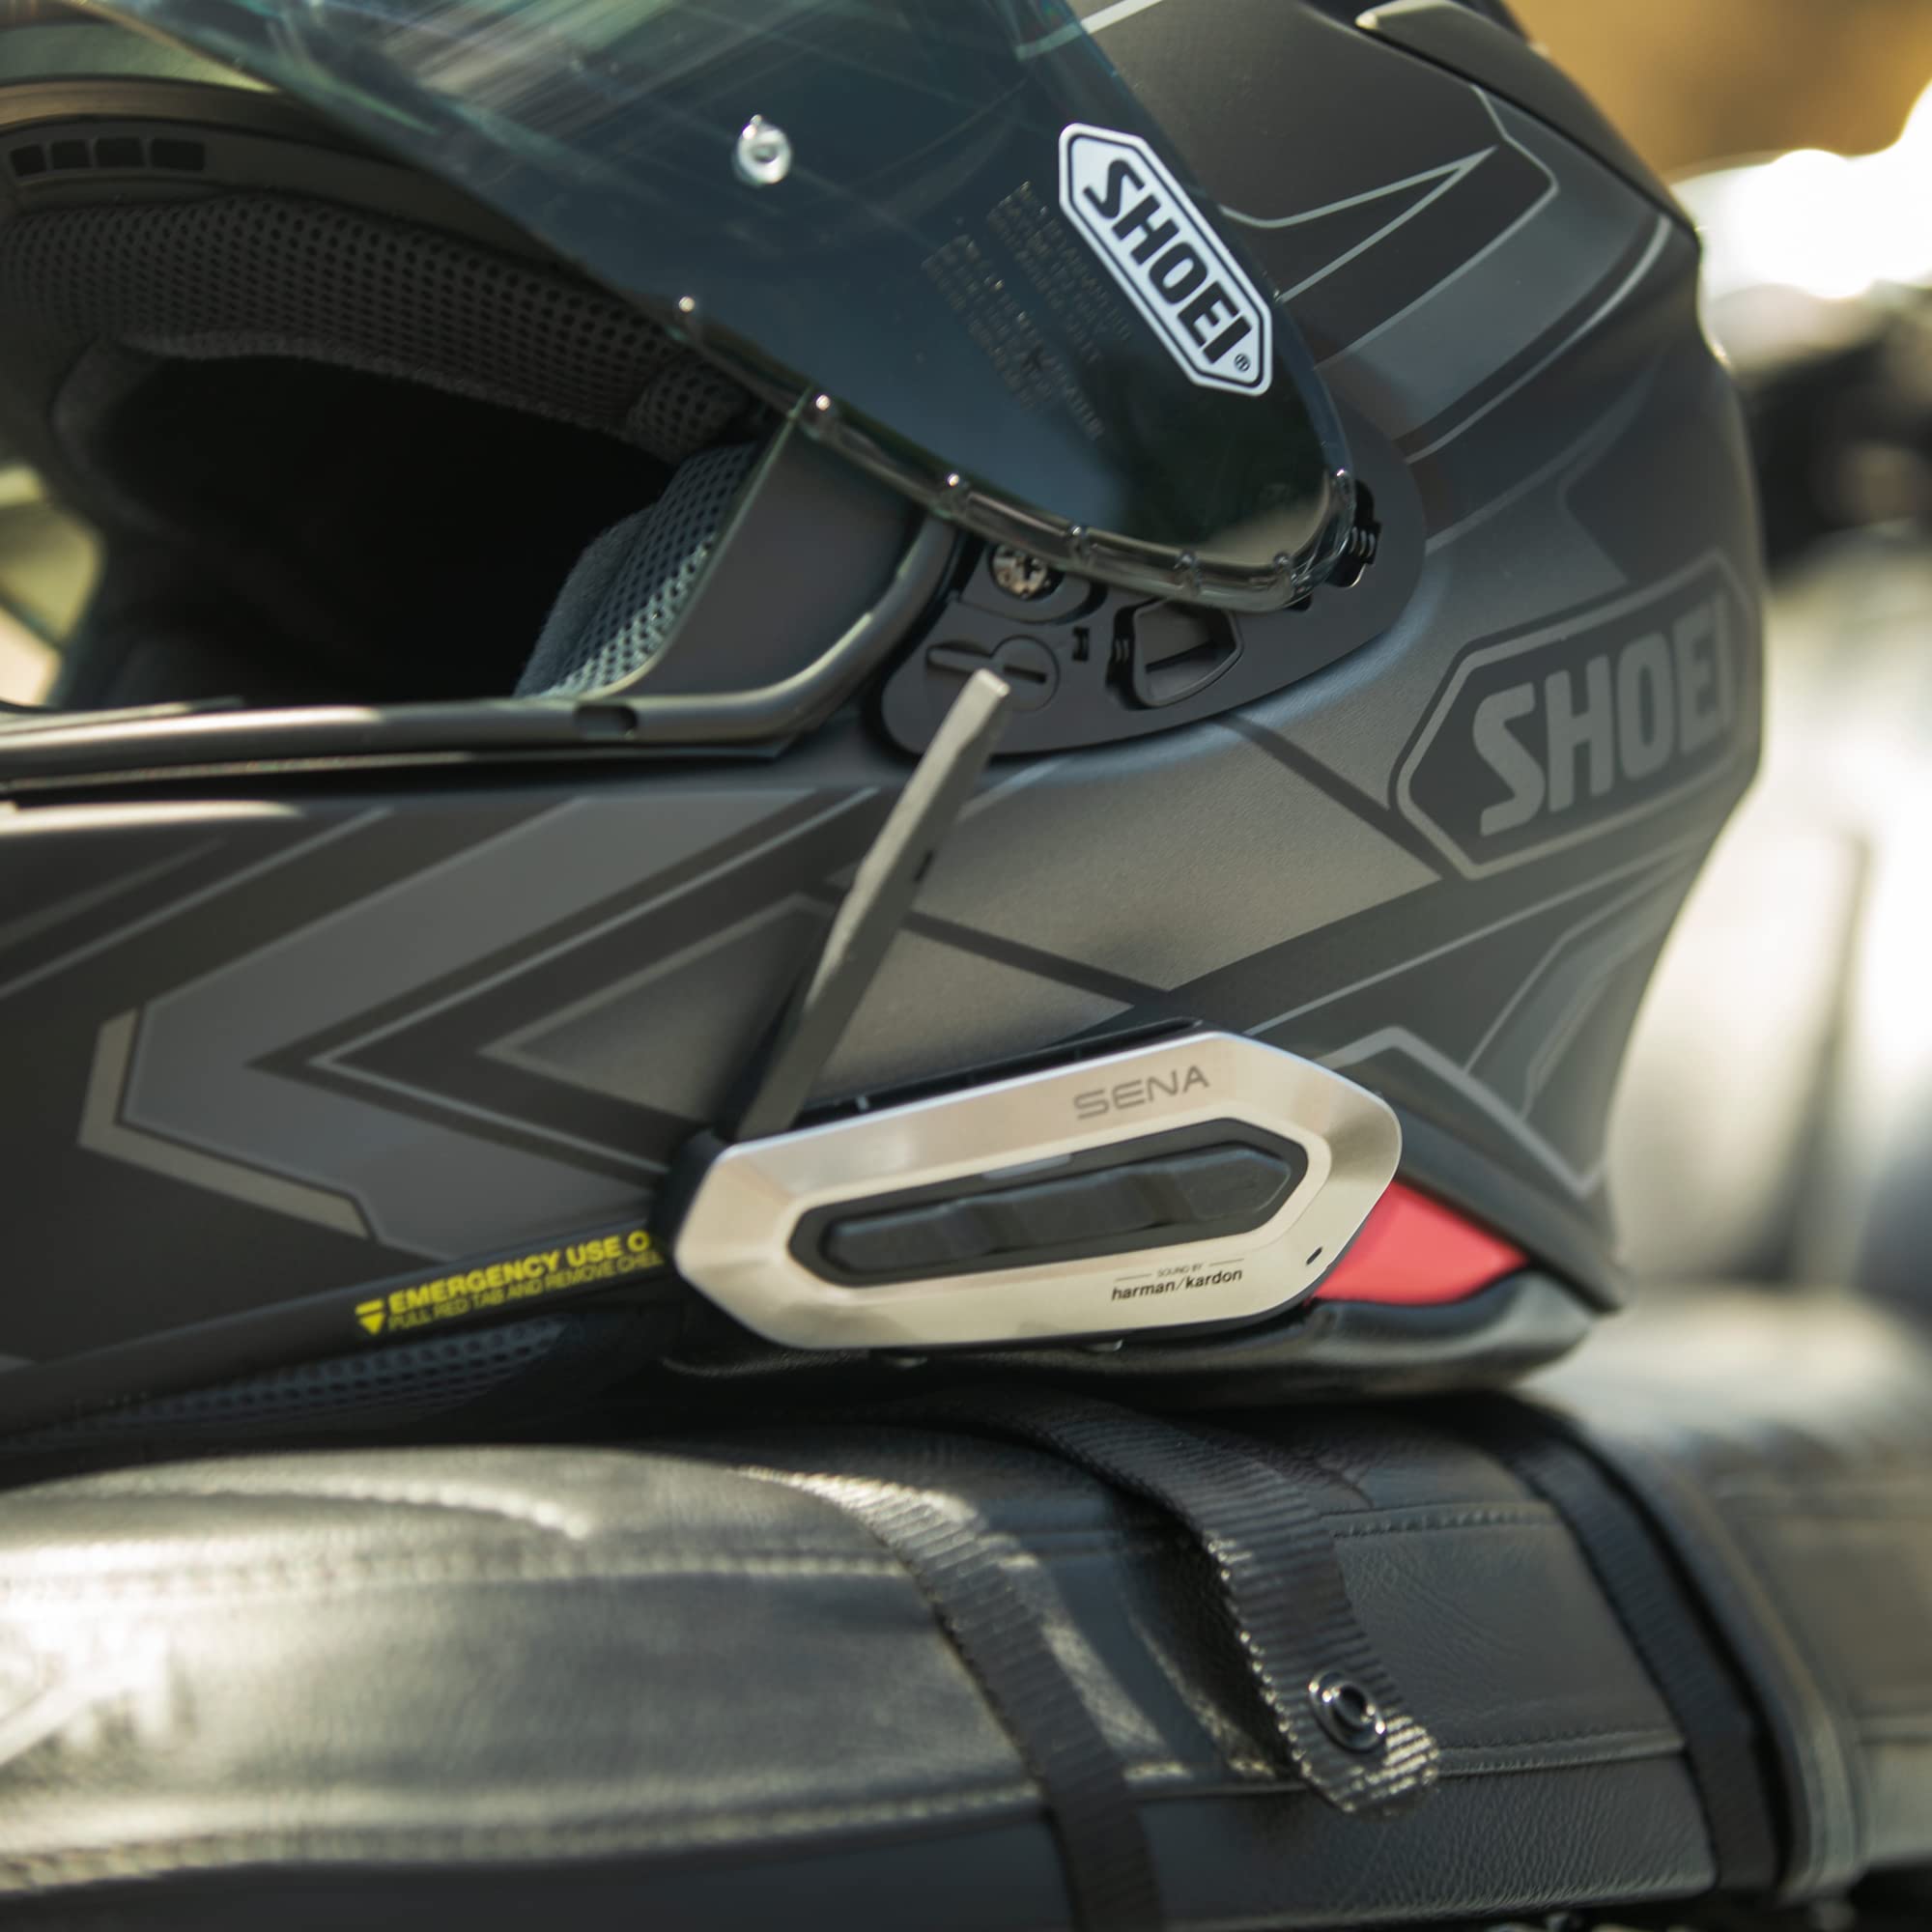 Sena Adult Srl Ext Mesh Bluetooth Communication System for SHOEI Helmets, Black, One Size US